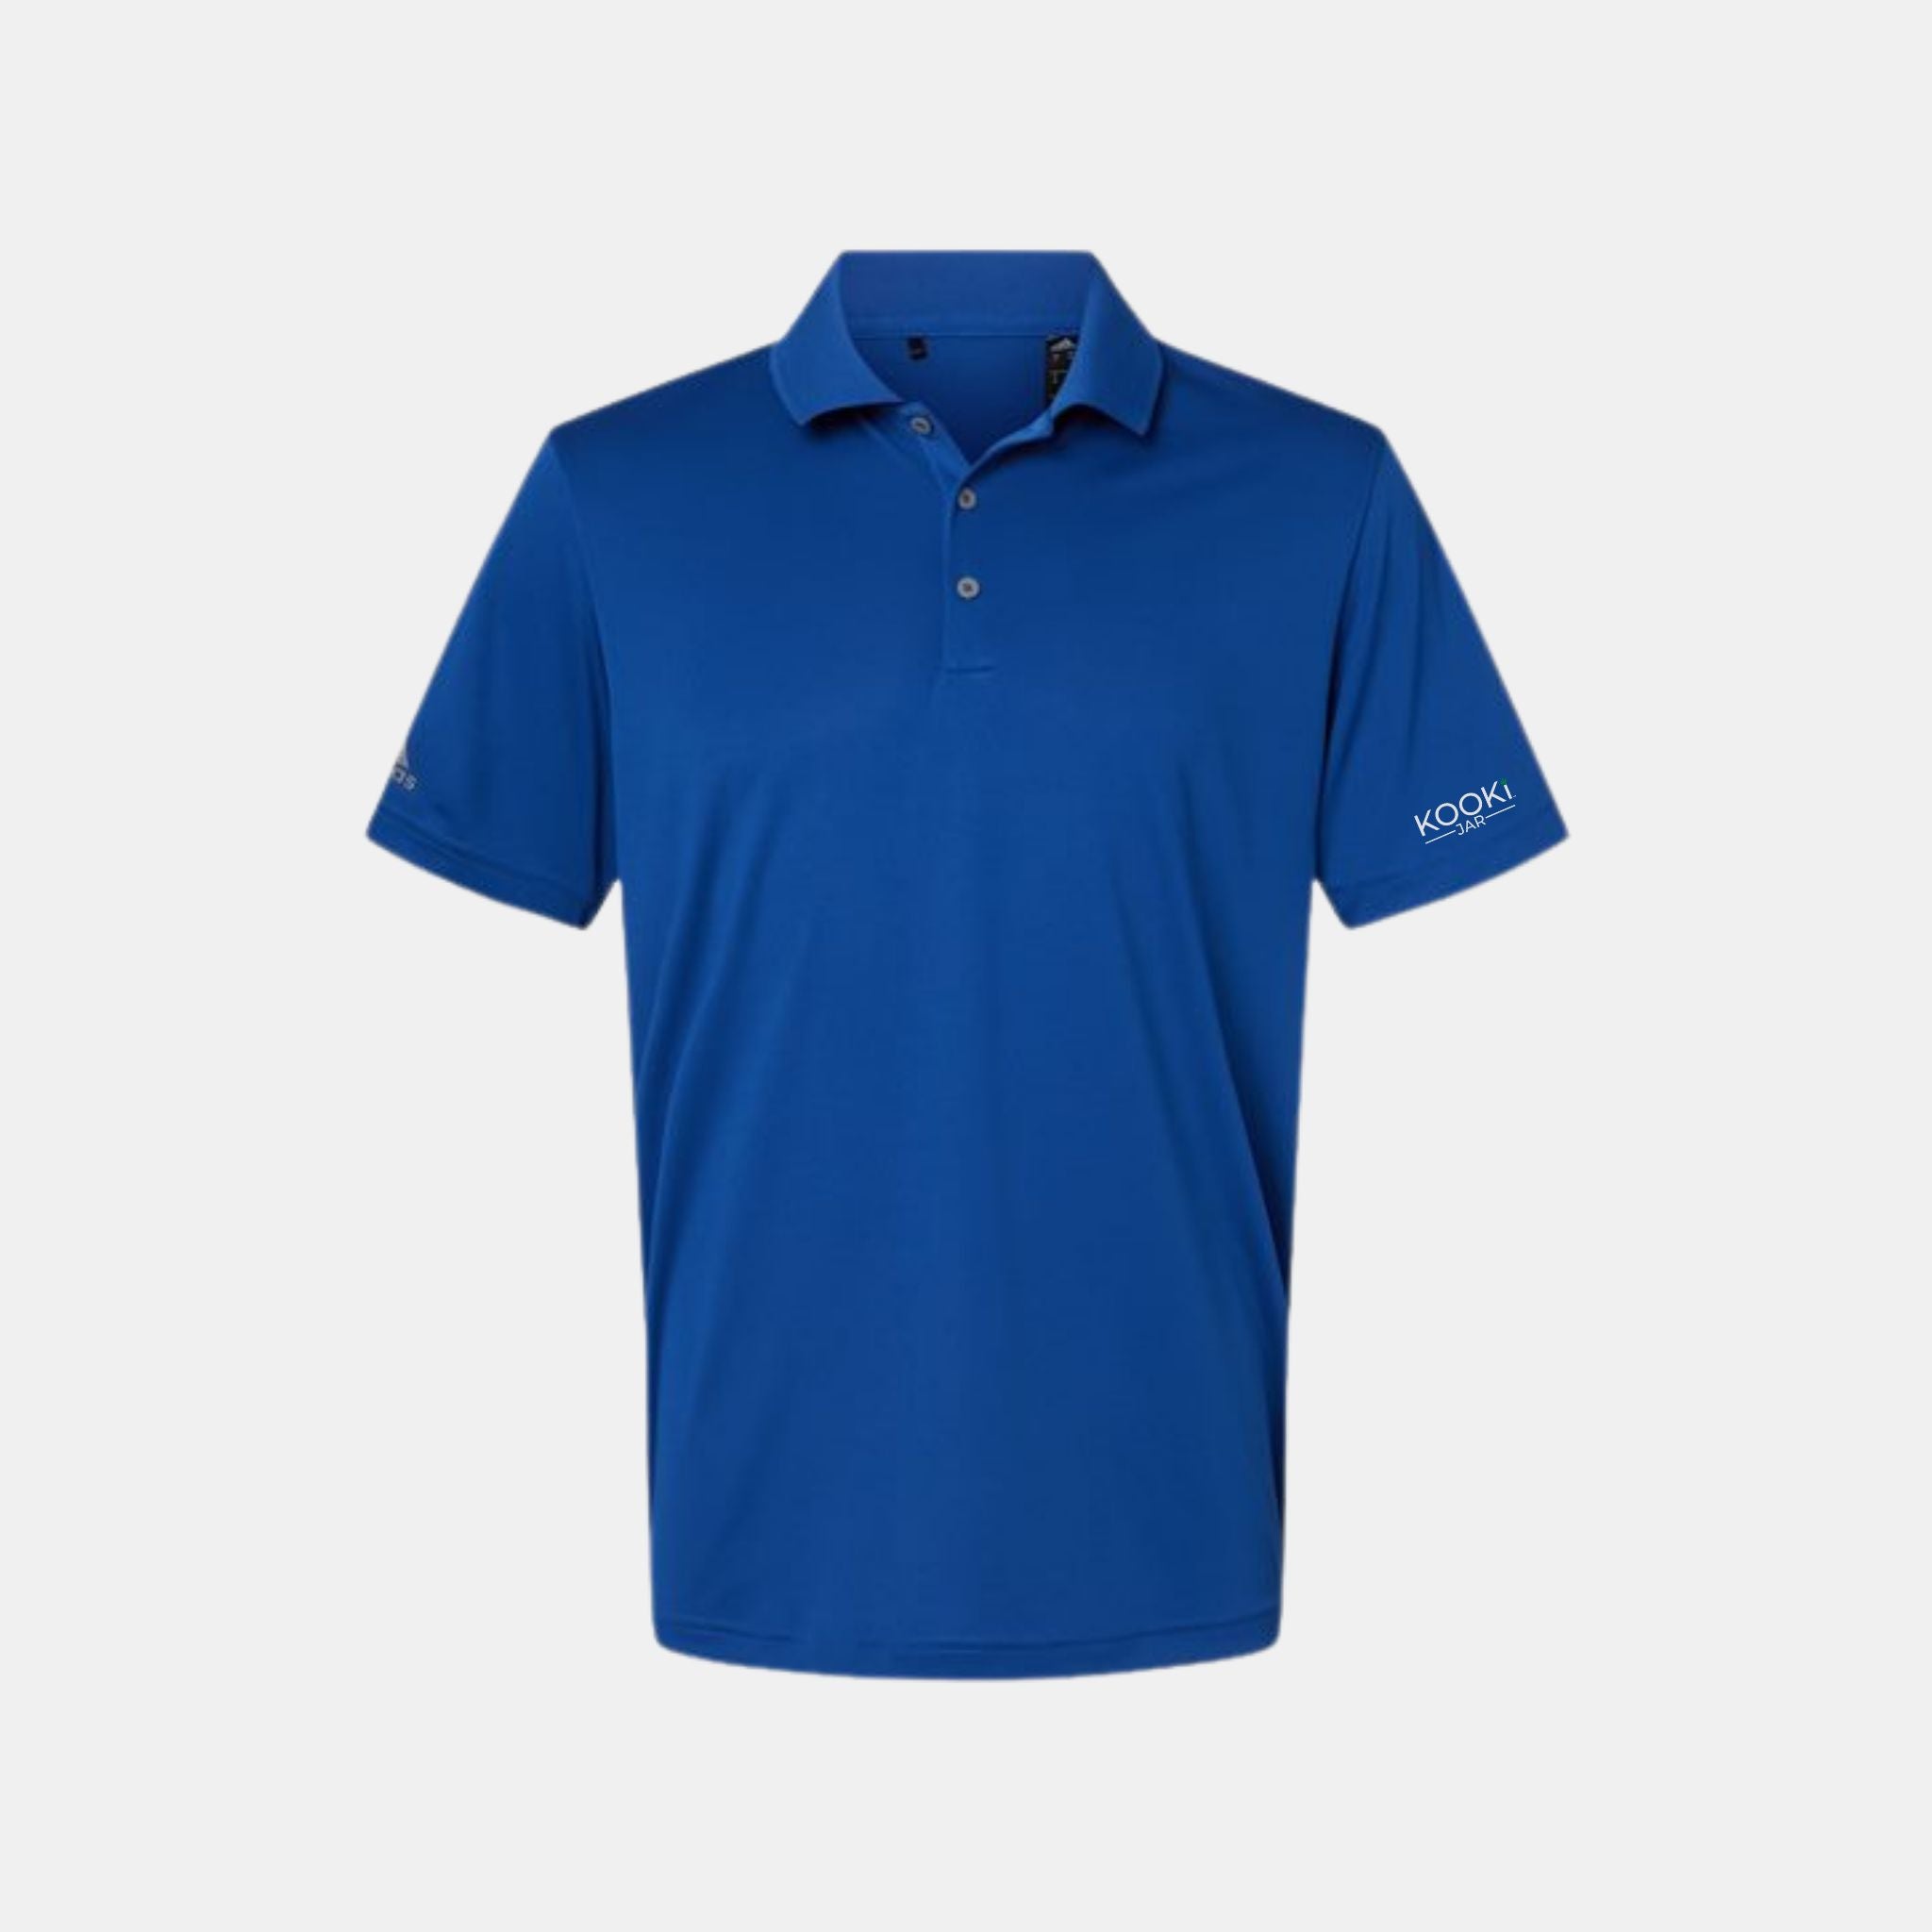 KookiJar Golfer | Adidas Polo Golf Shirt